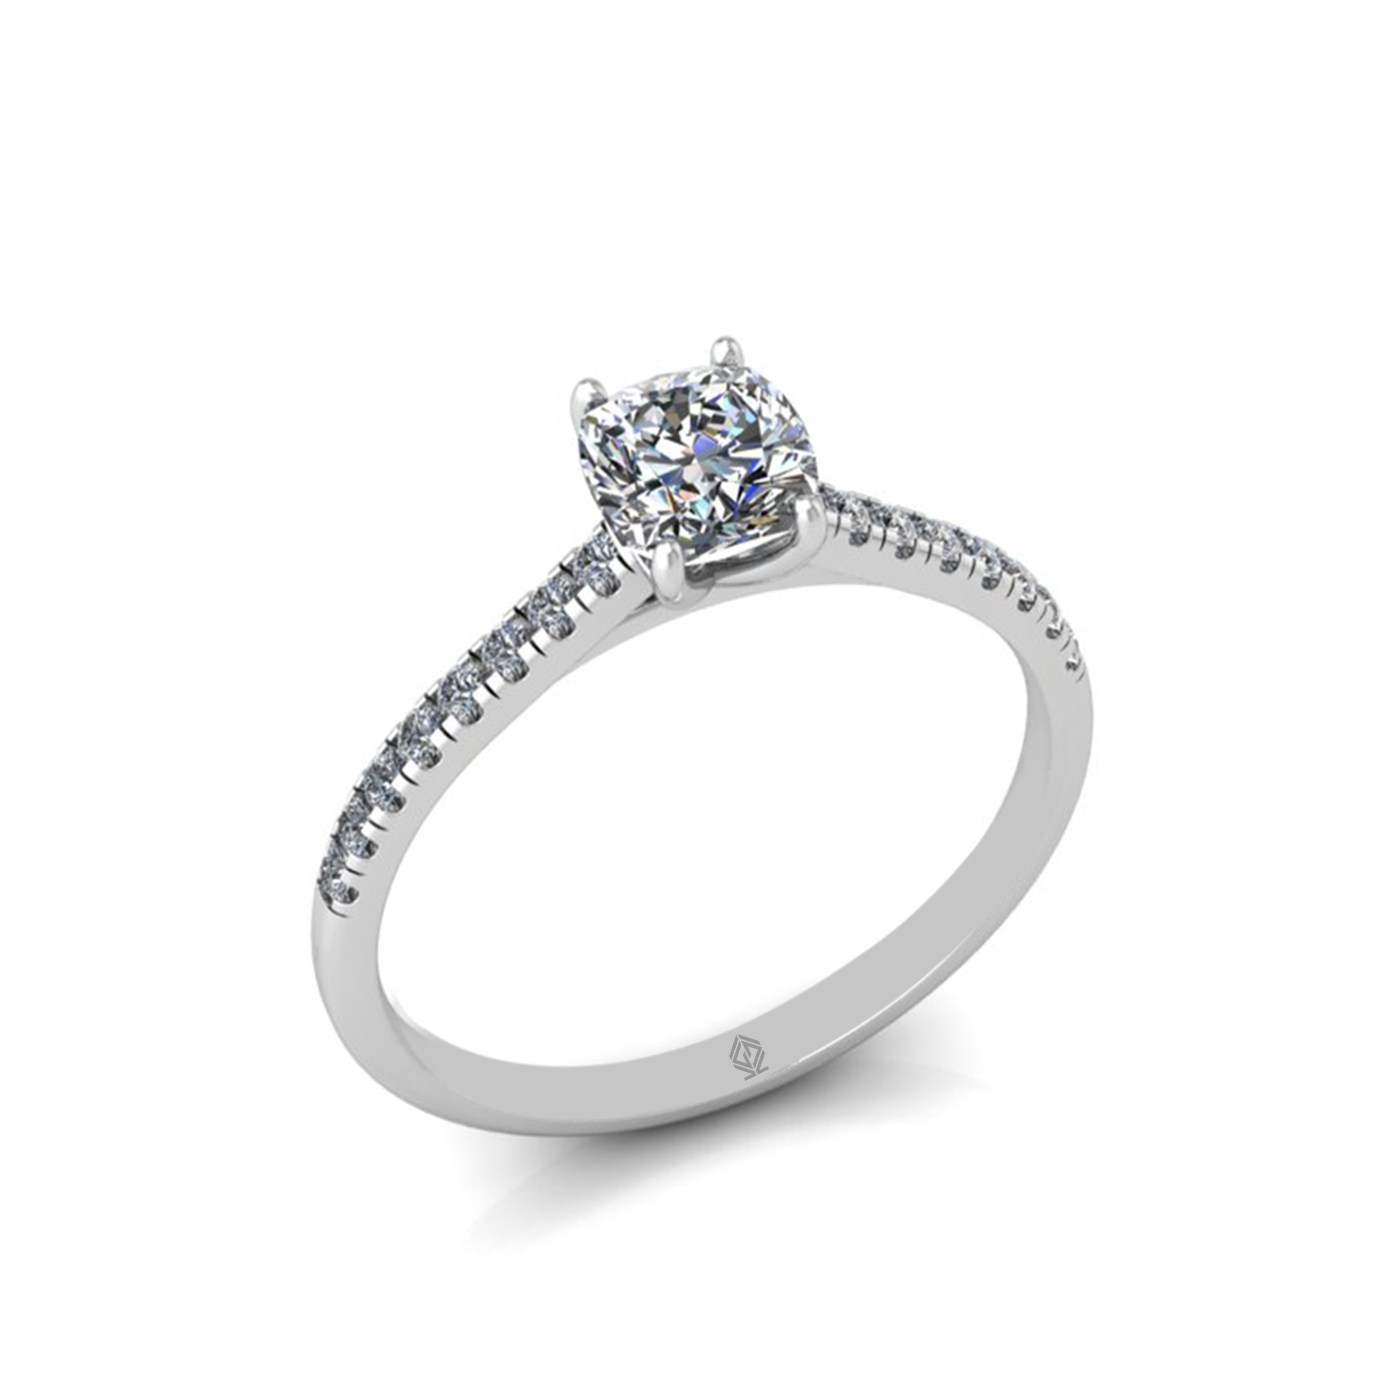 18k white gold 0,80 ct 4 prongs cushion cut diamond engagement ring with whisper thin pavÉ set band